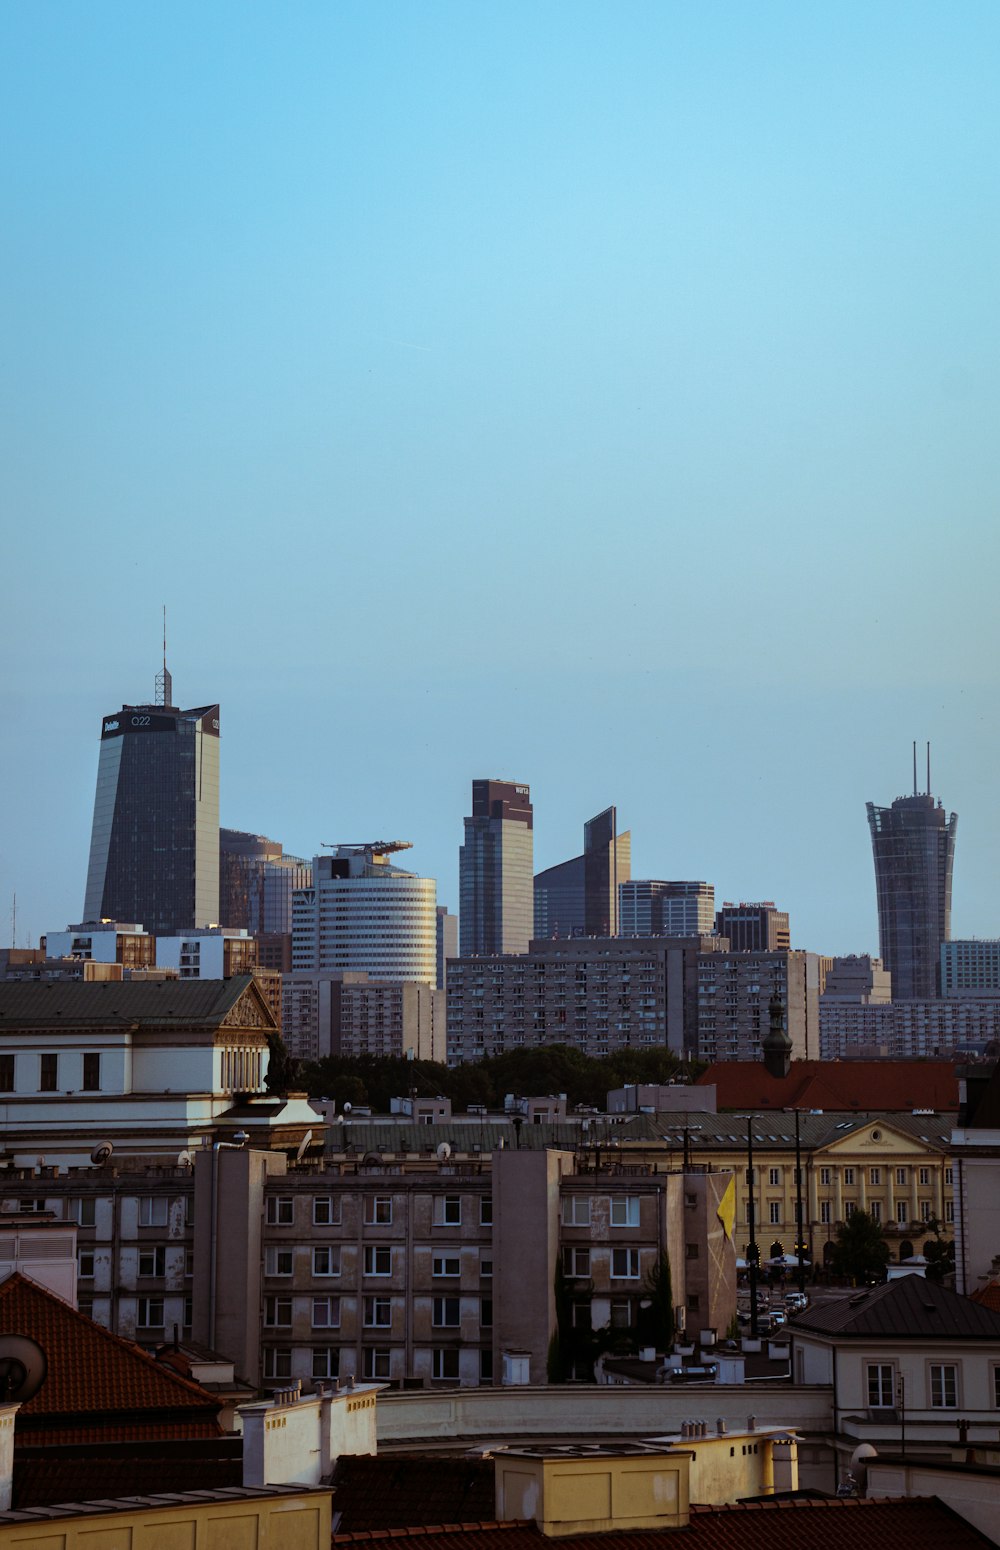 a city skyline with tall buildings and a blue sky